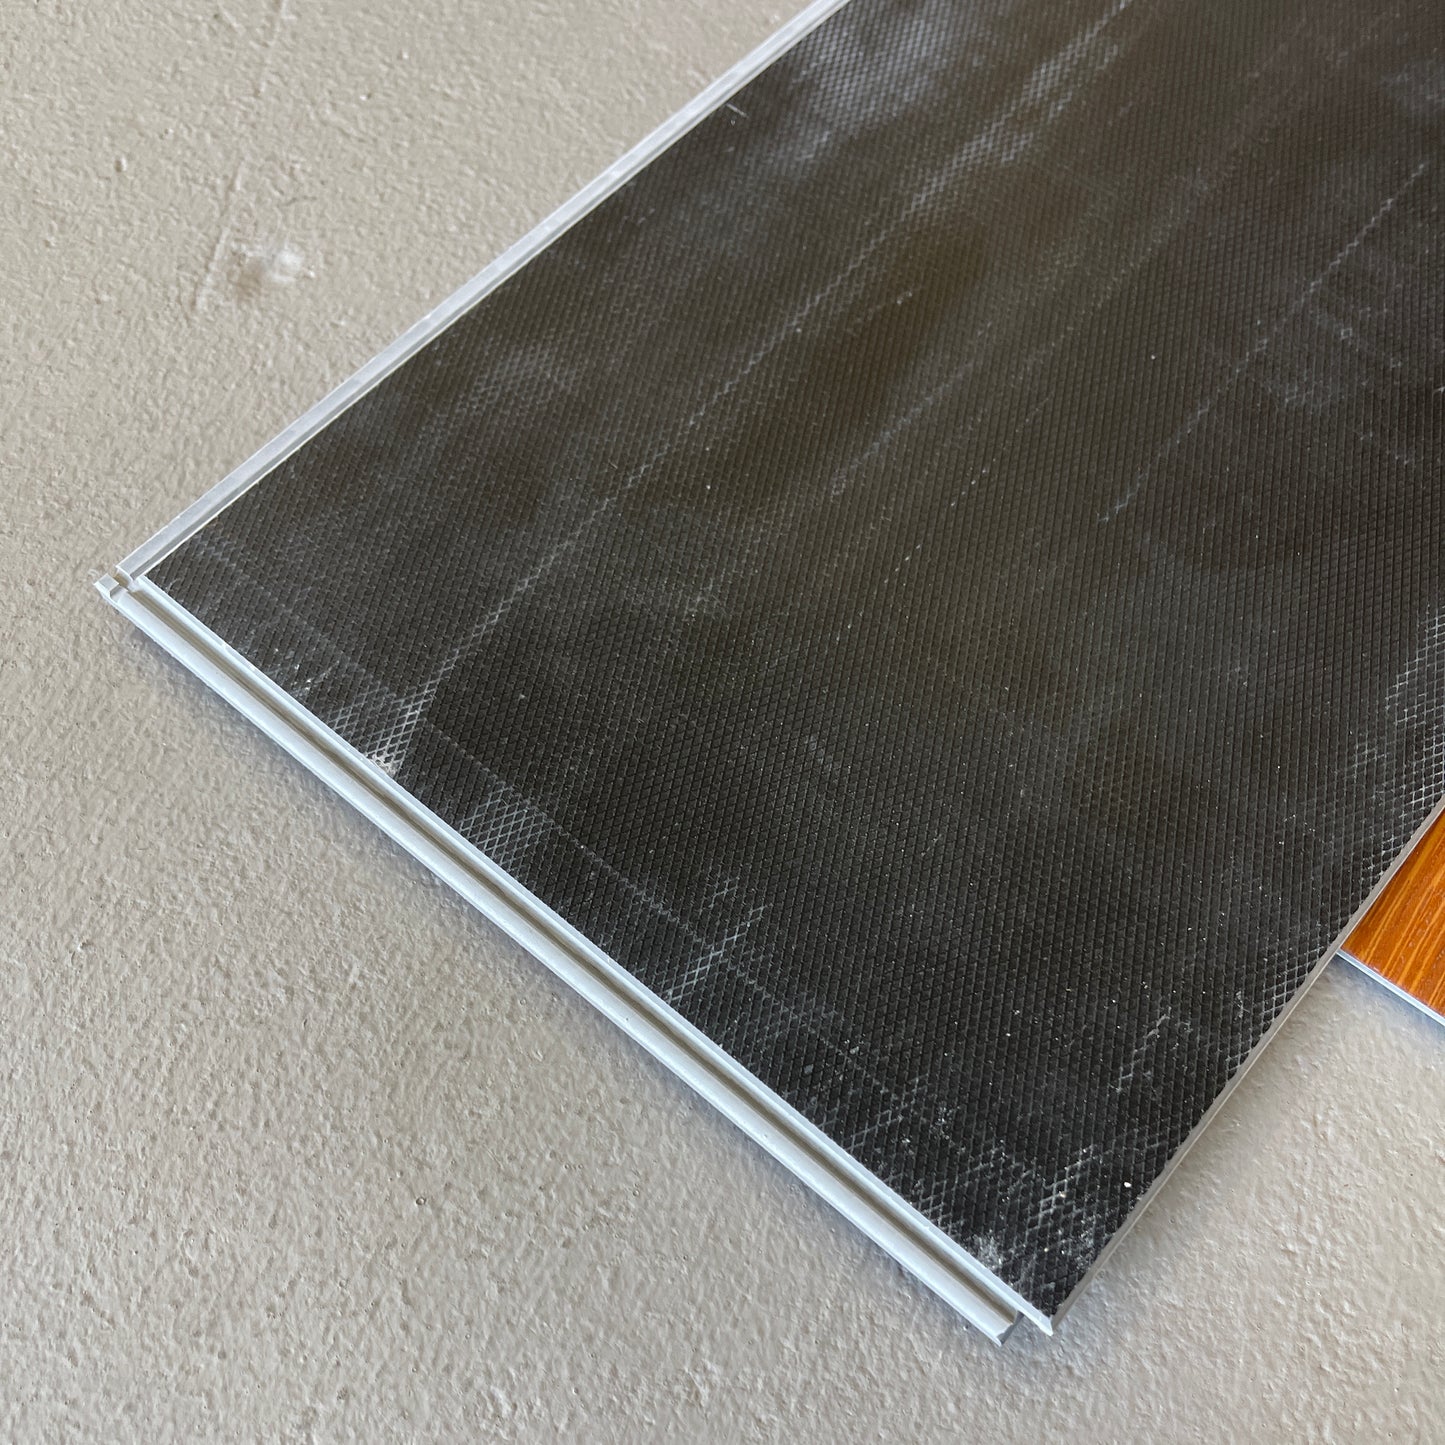 CALI Vinyl PRO Classic Saddlewood Waterproof Plank Flooring 7 in W (23.77 sq ft)